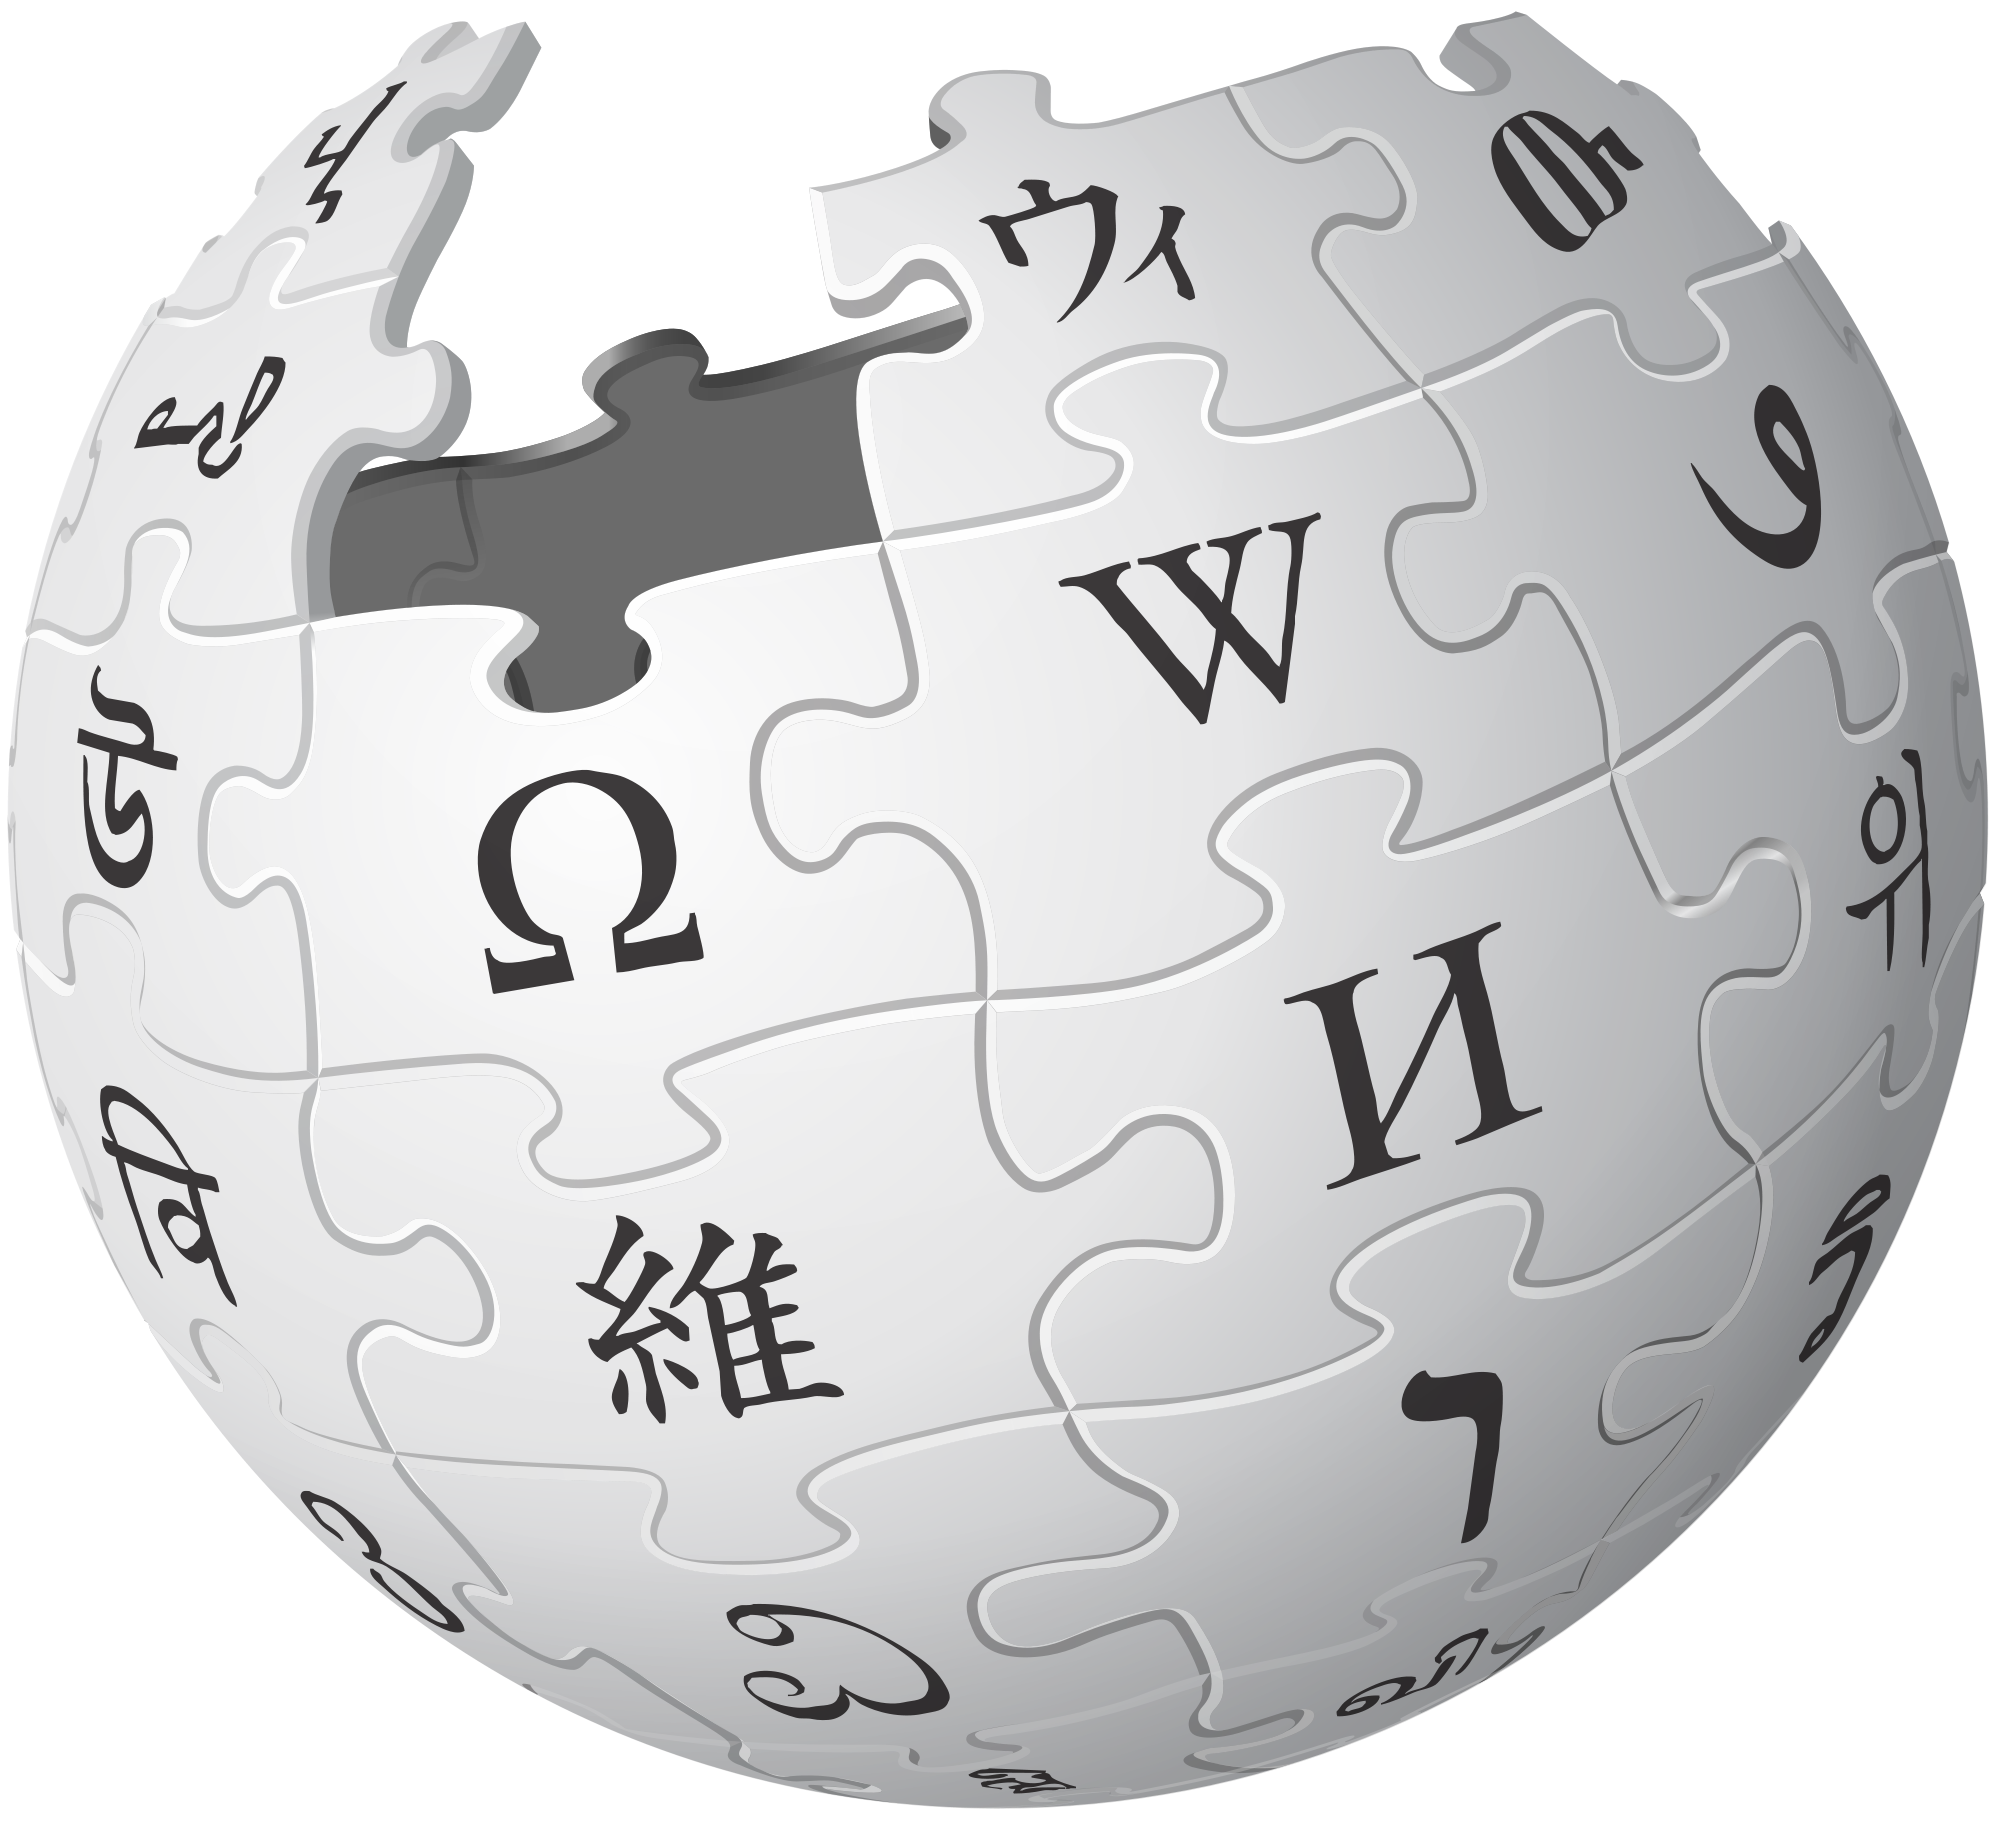 Resultado de imagen para wikipedia logo png